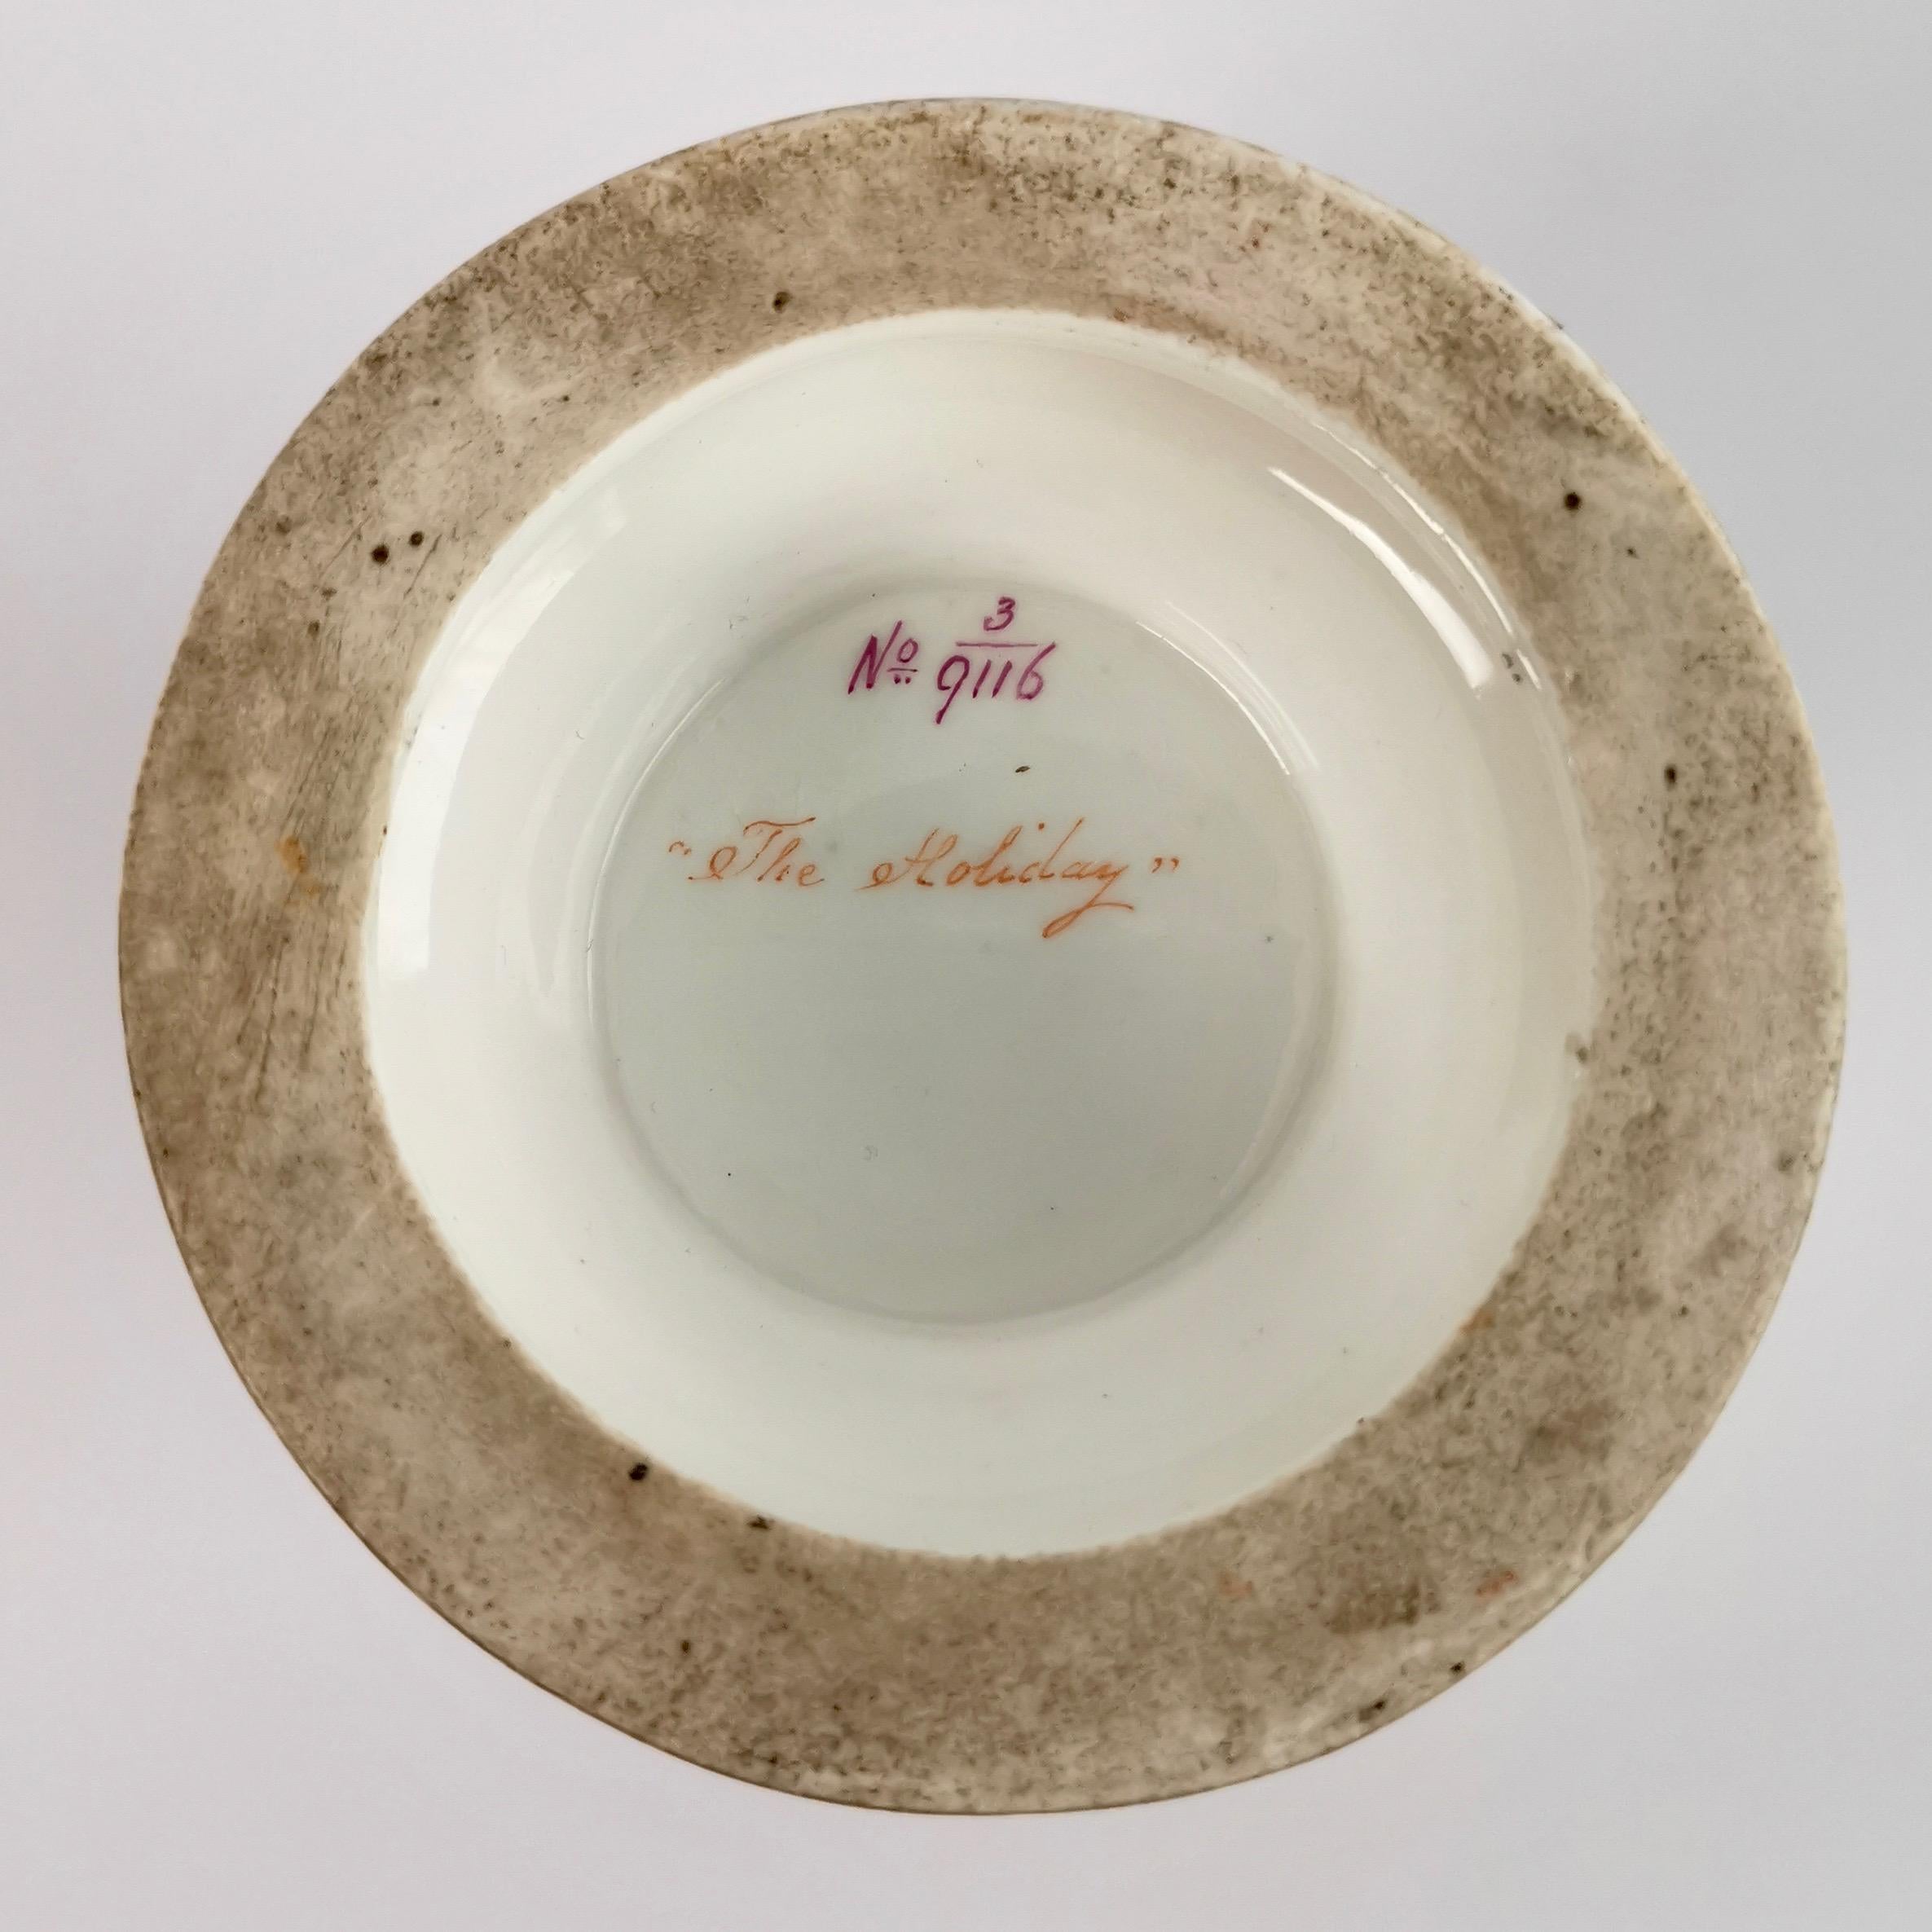 Samuel Alcock Porcelain Vase, Maroon 